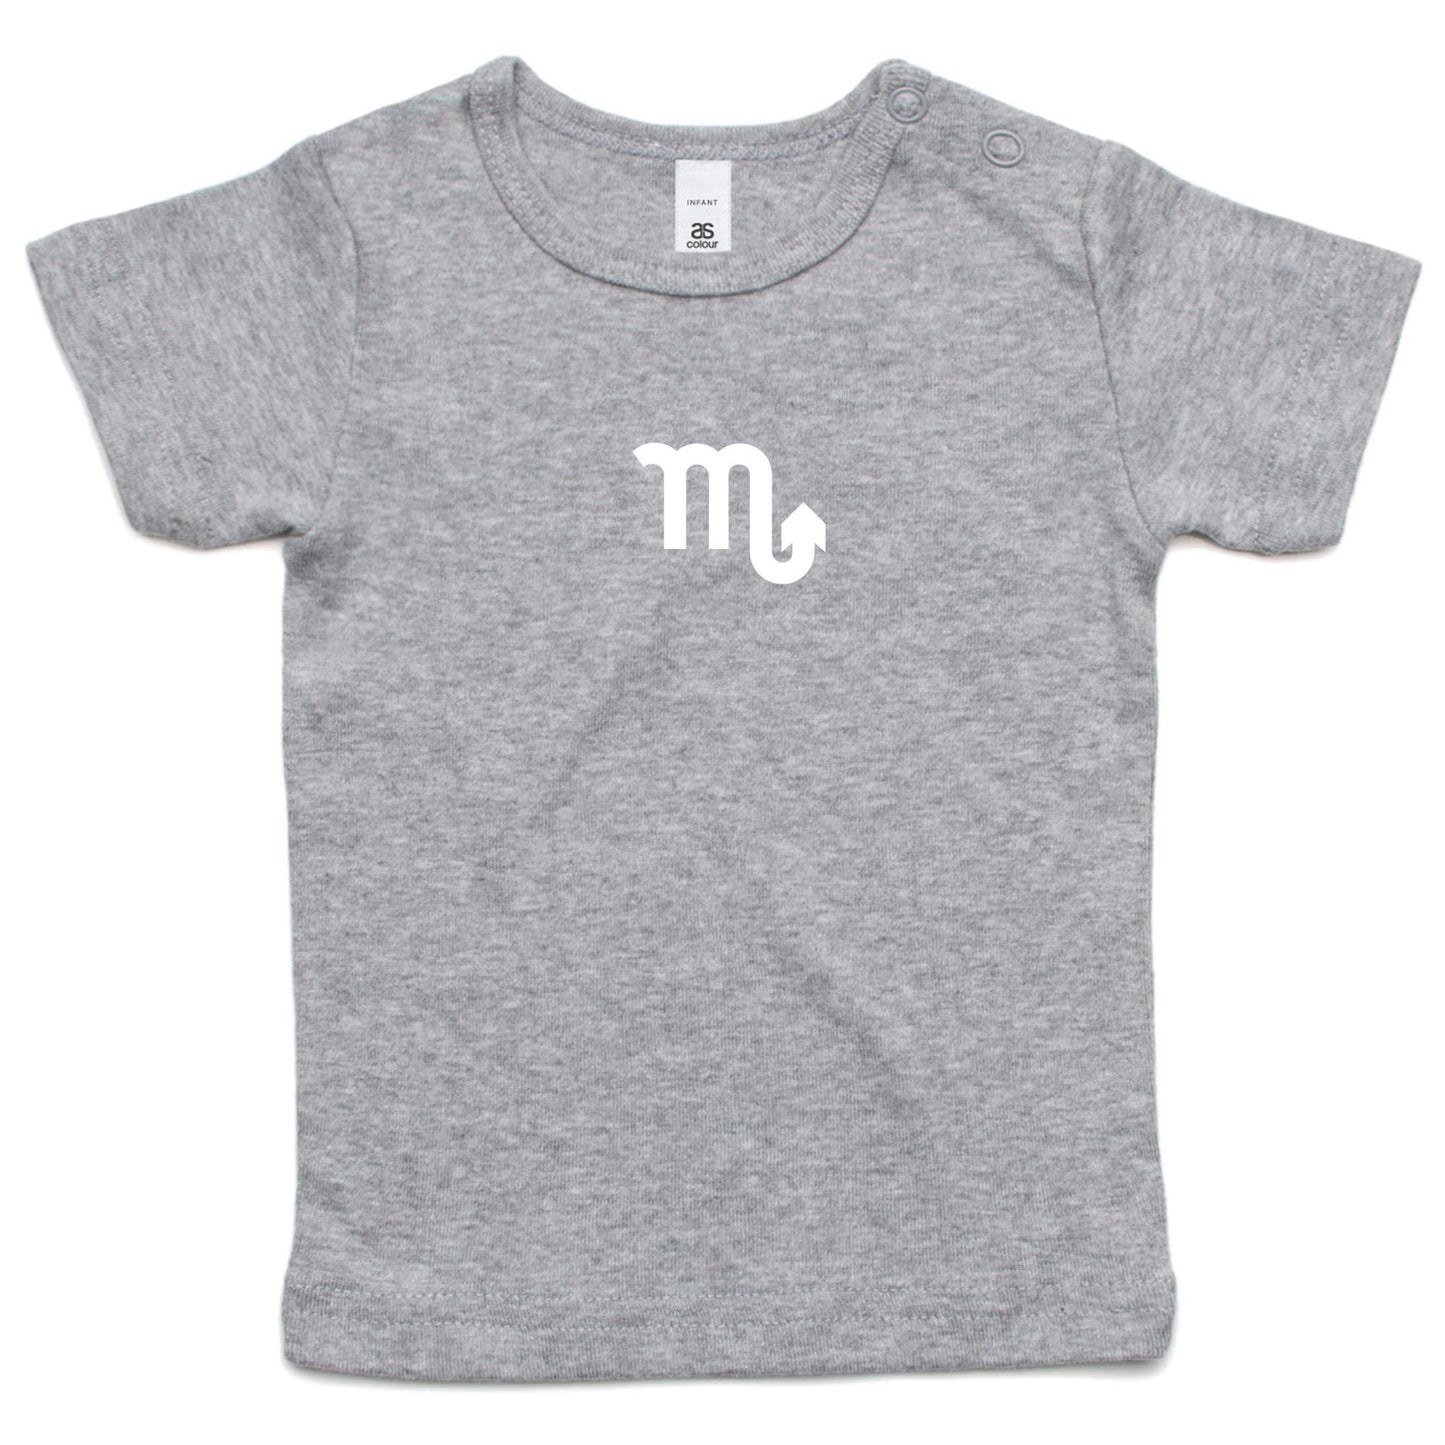 Scorpio T Shirts for Babies